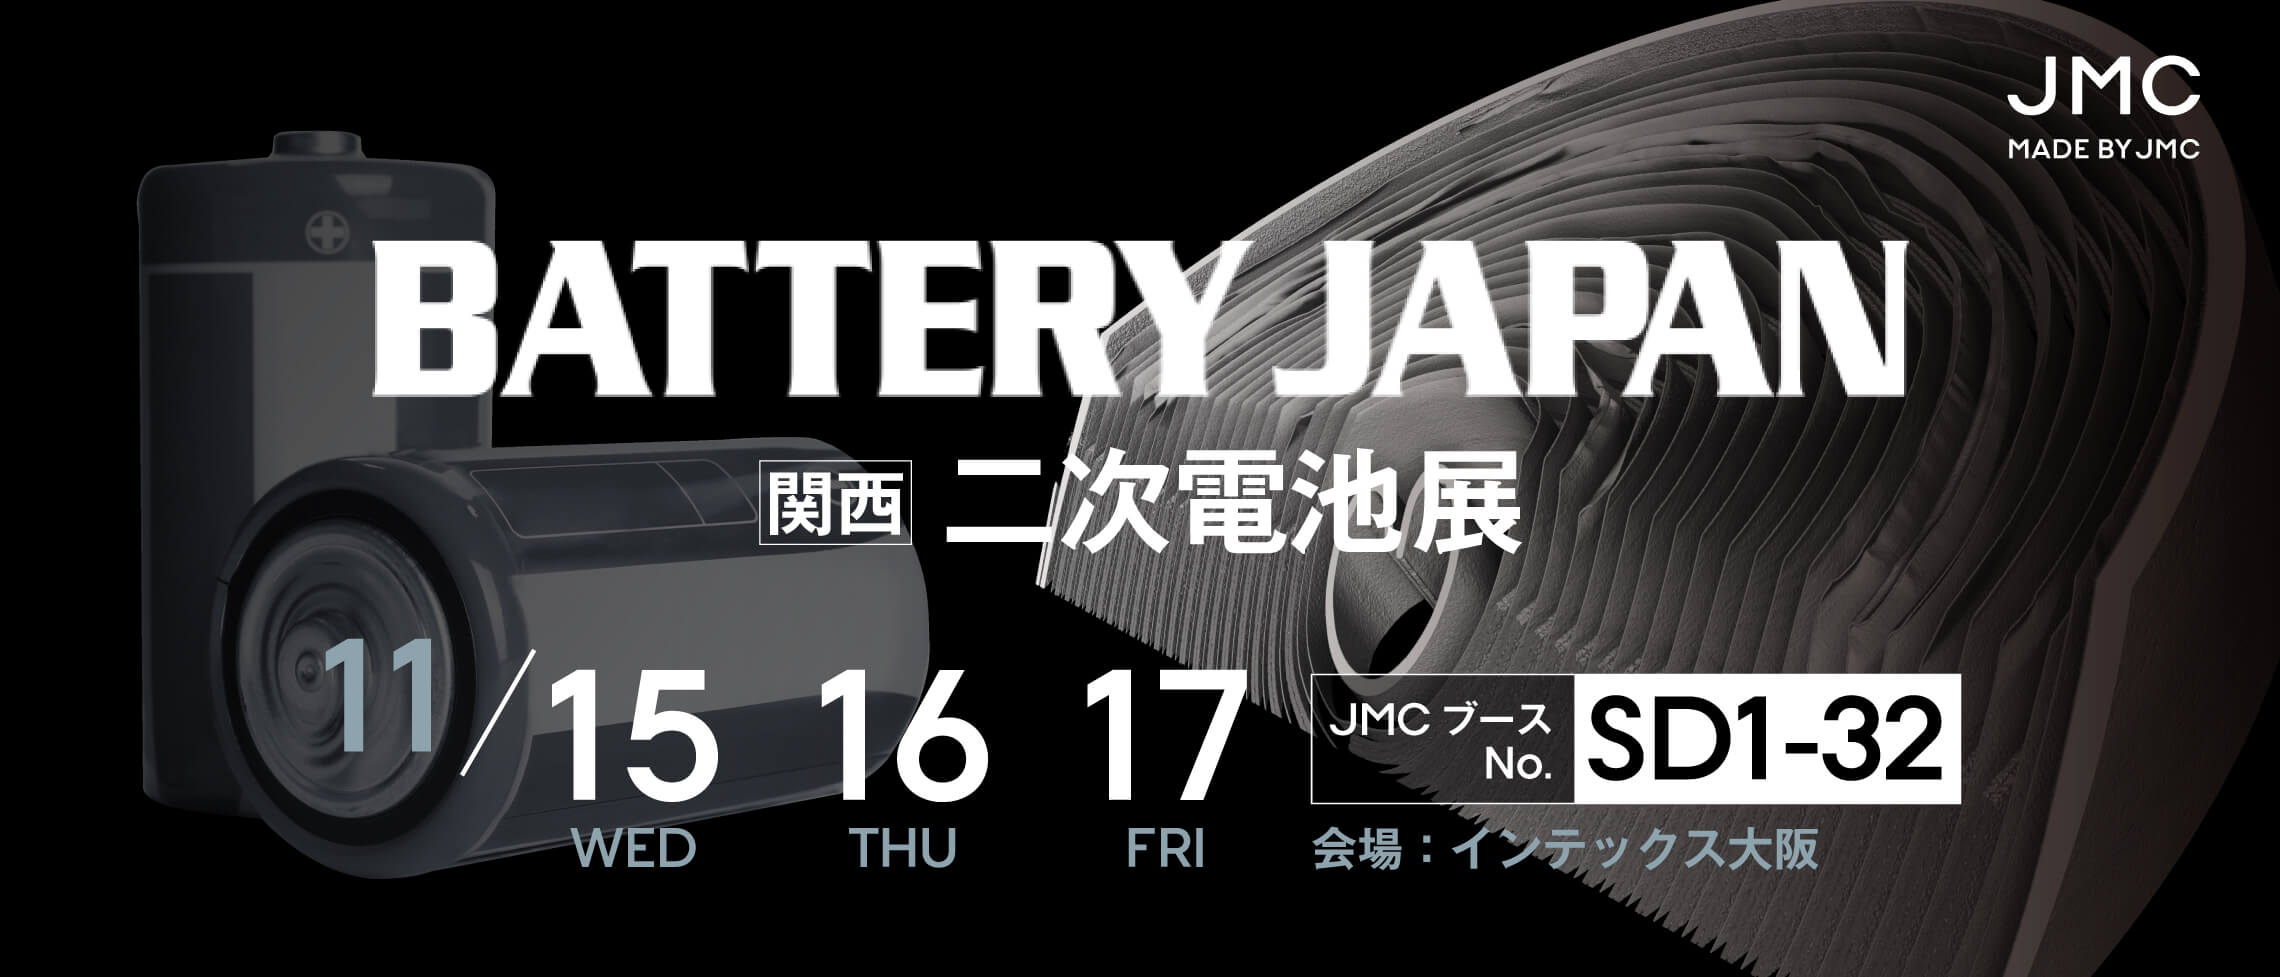 BATTERY JAPAN 二次電池展